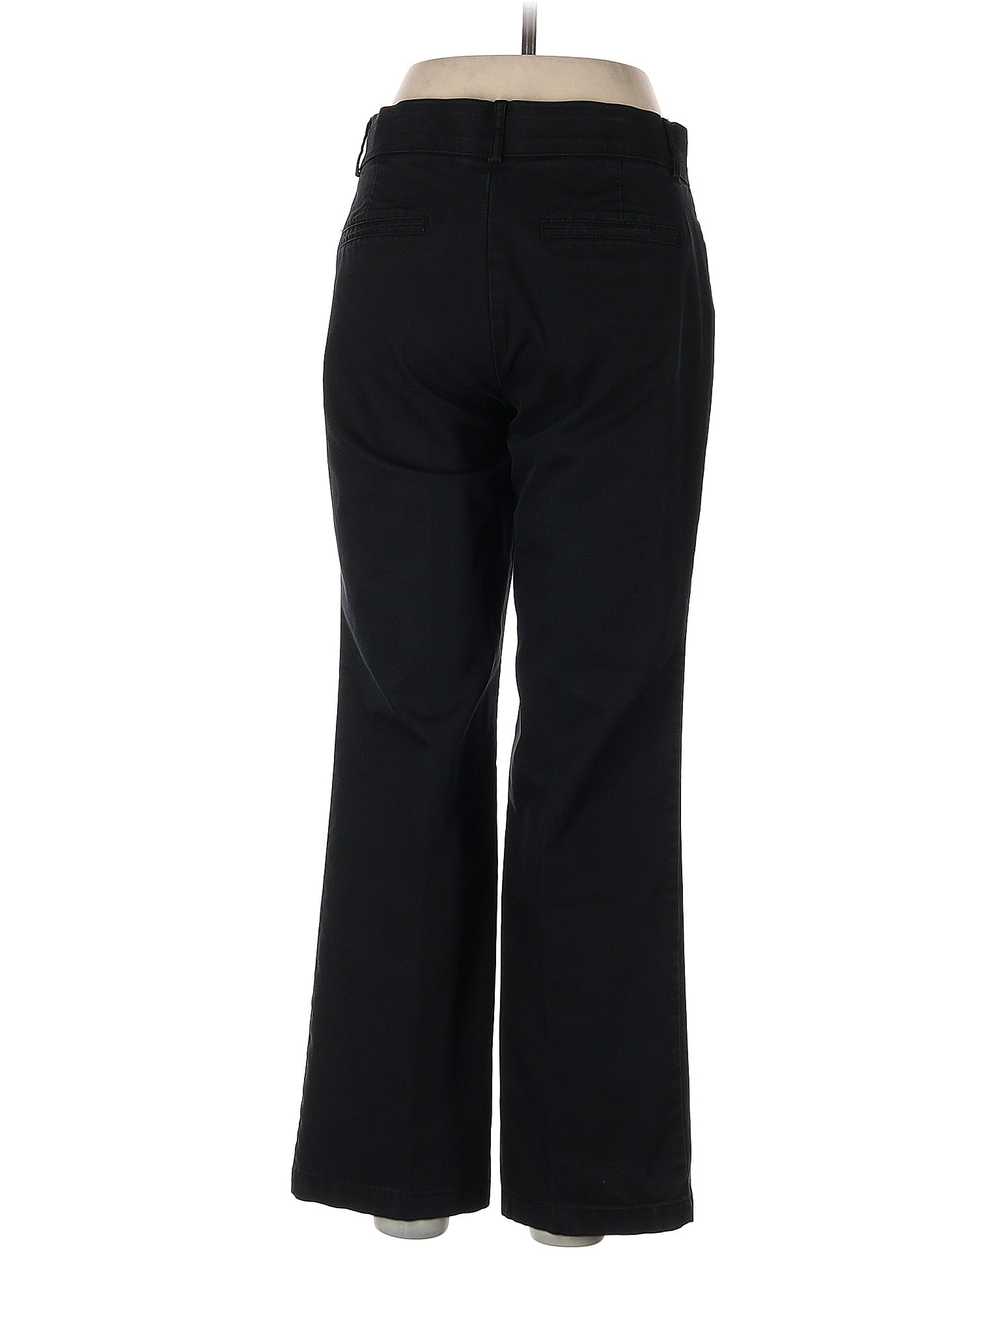 Dockers Women Black Casual Pants 6 - image 2